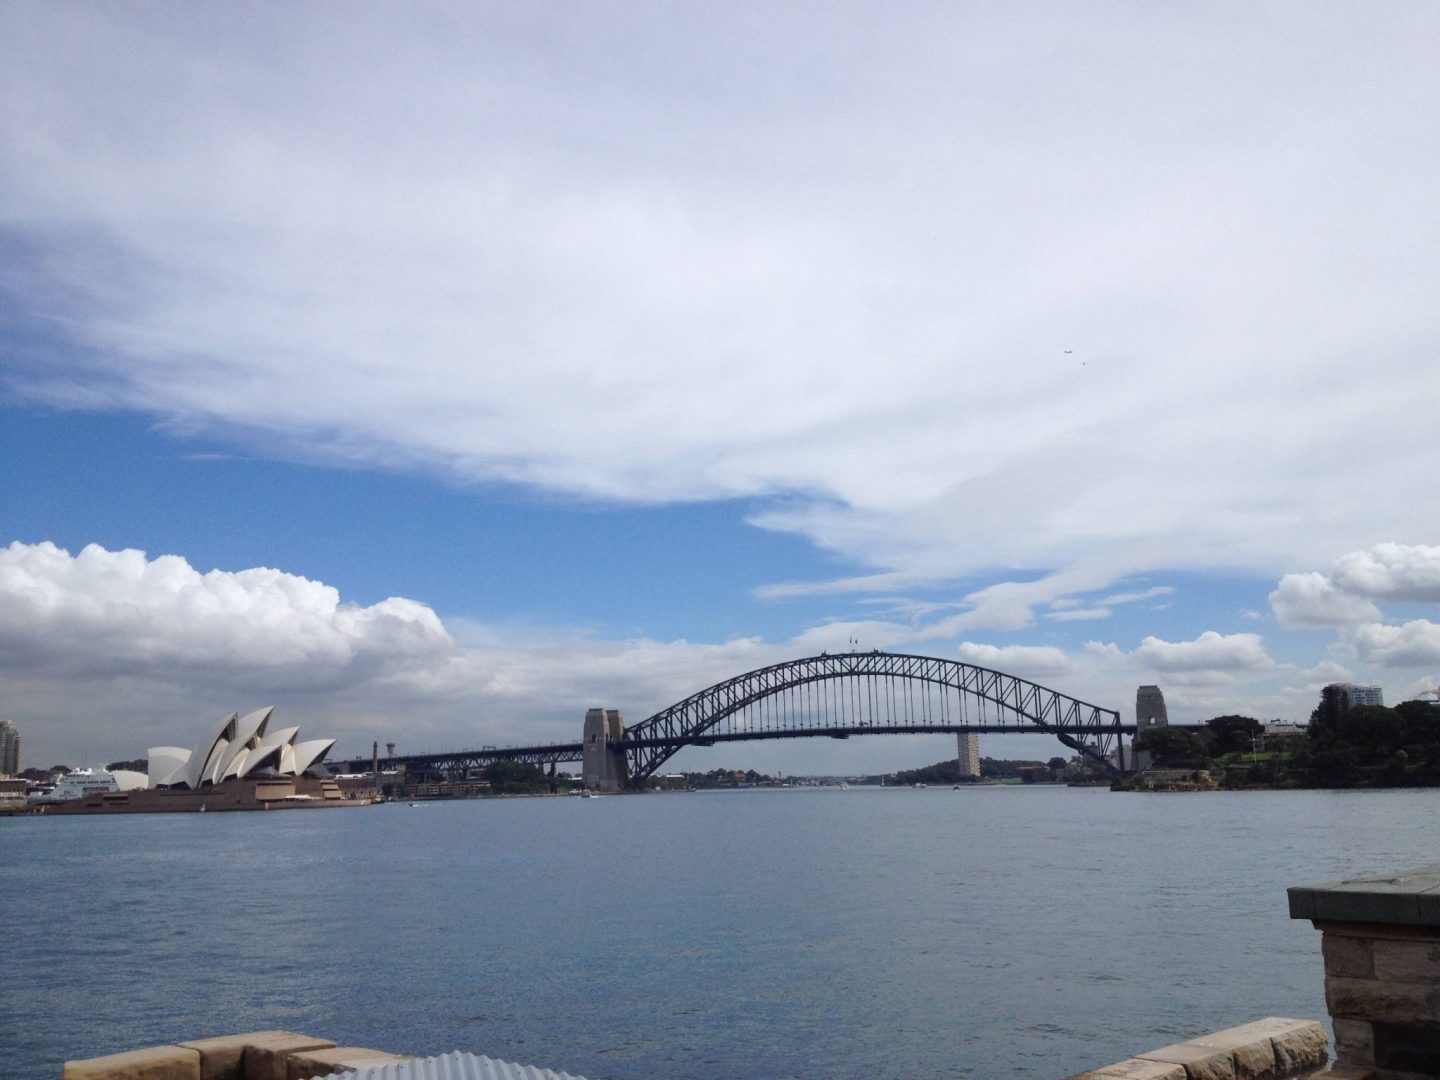 Sydney Harbour from Fort Denison